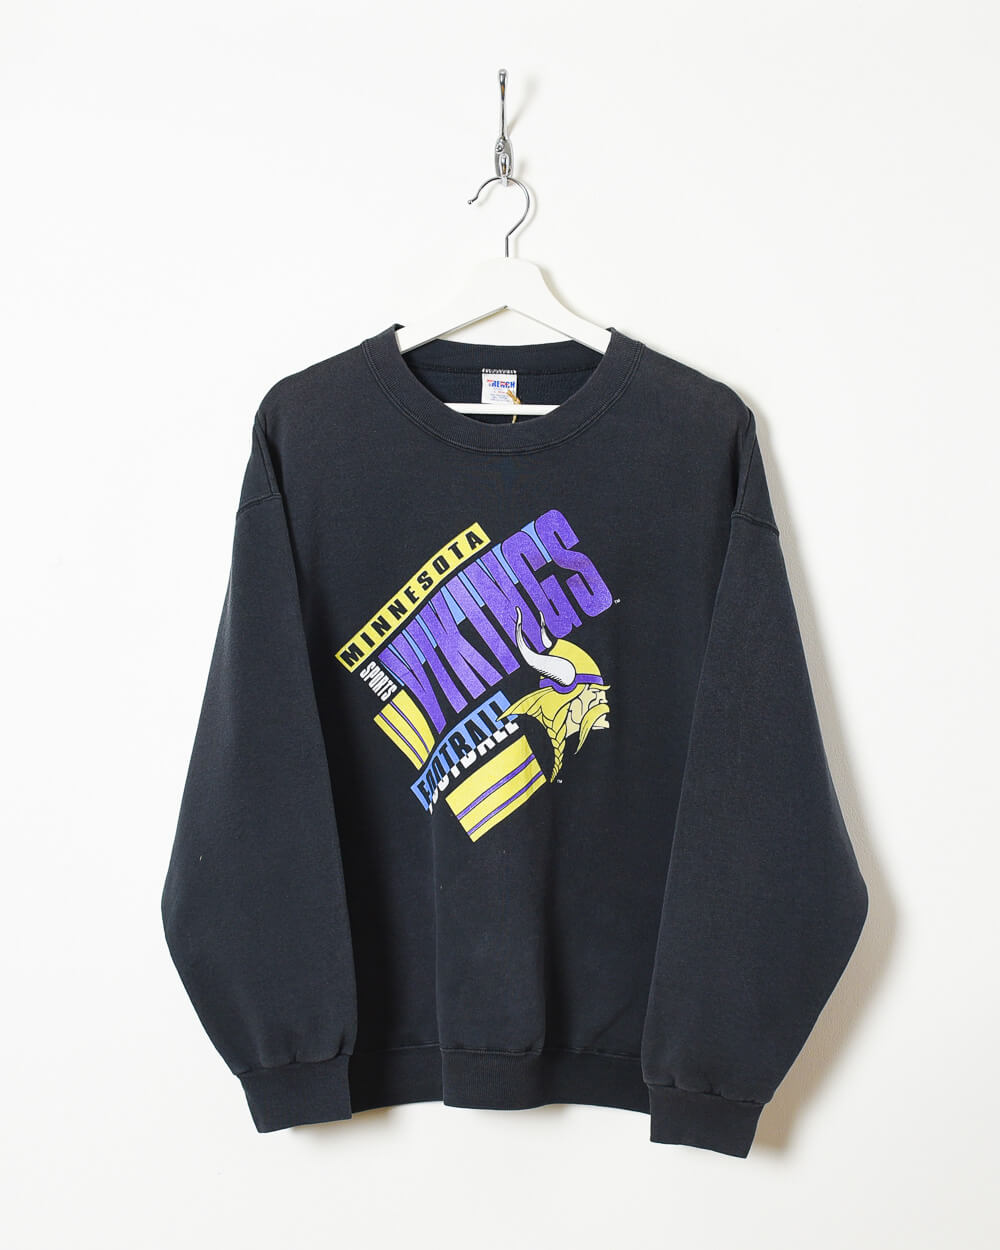 Black Trench Minnesota Vikings Sports Football Sweatshirt - Medium